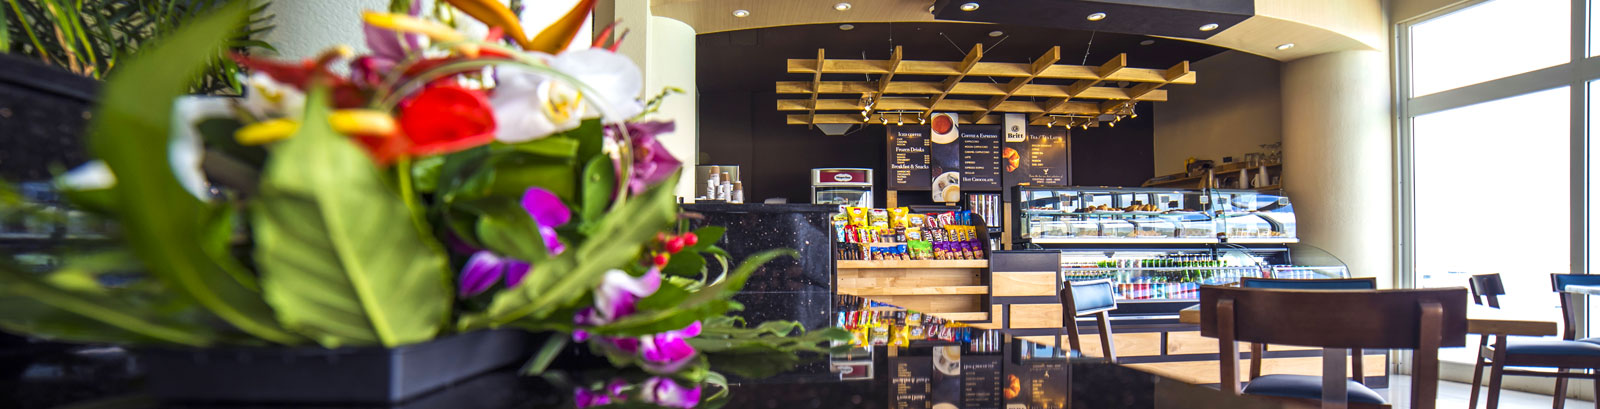 Café Britt - Our recommendations at Simpson Bay Resort, Marina & Spa